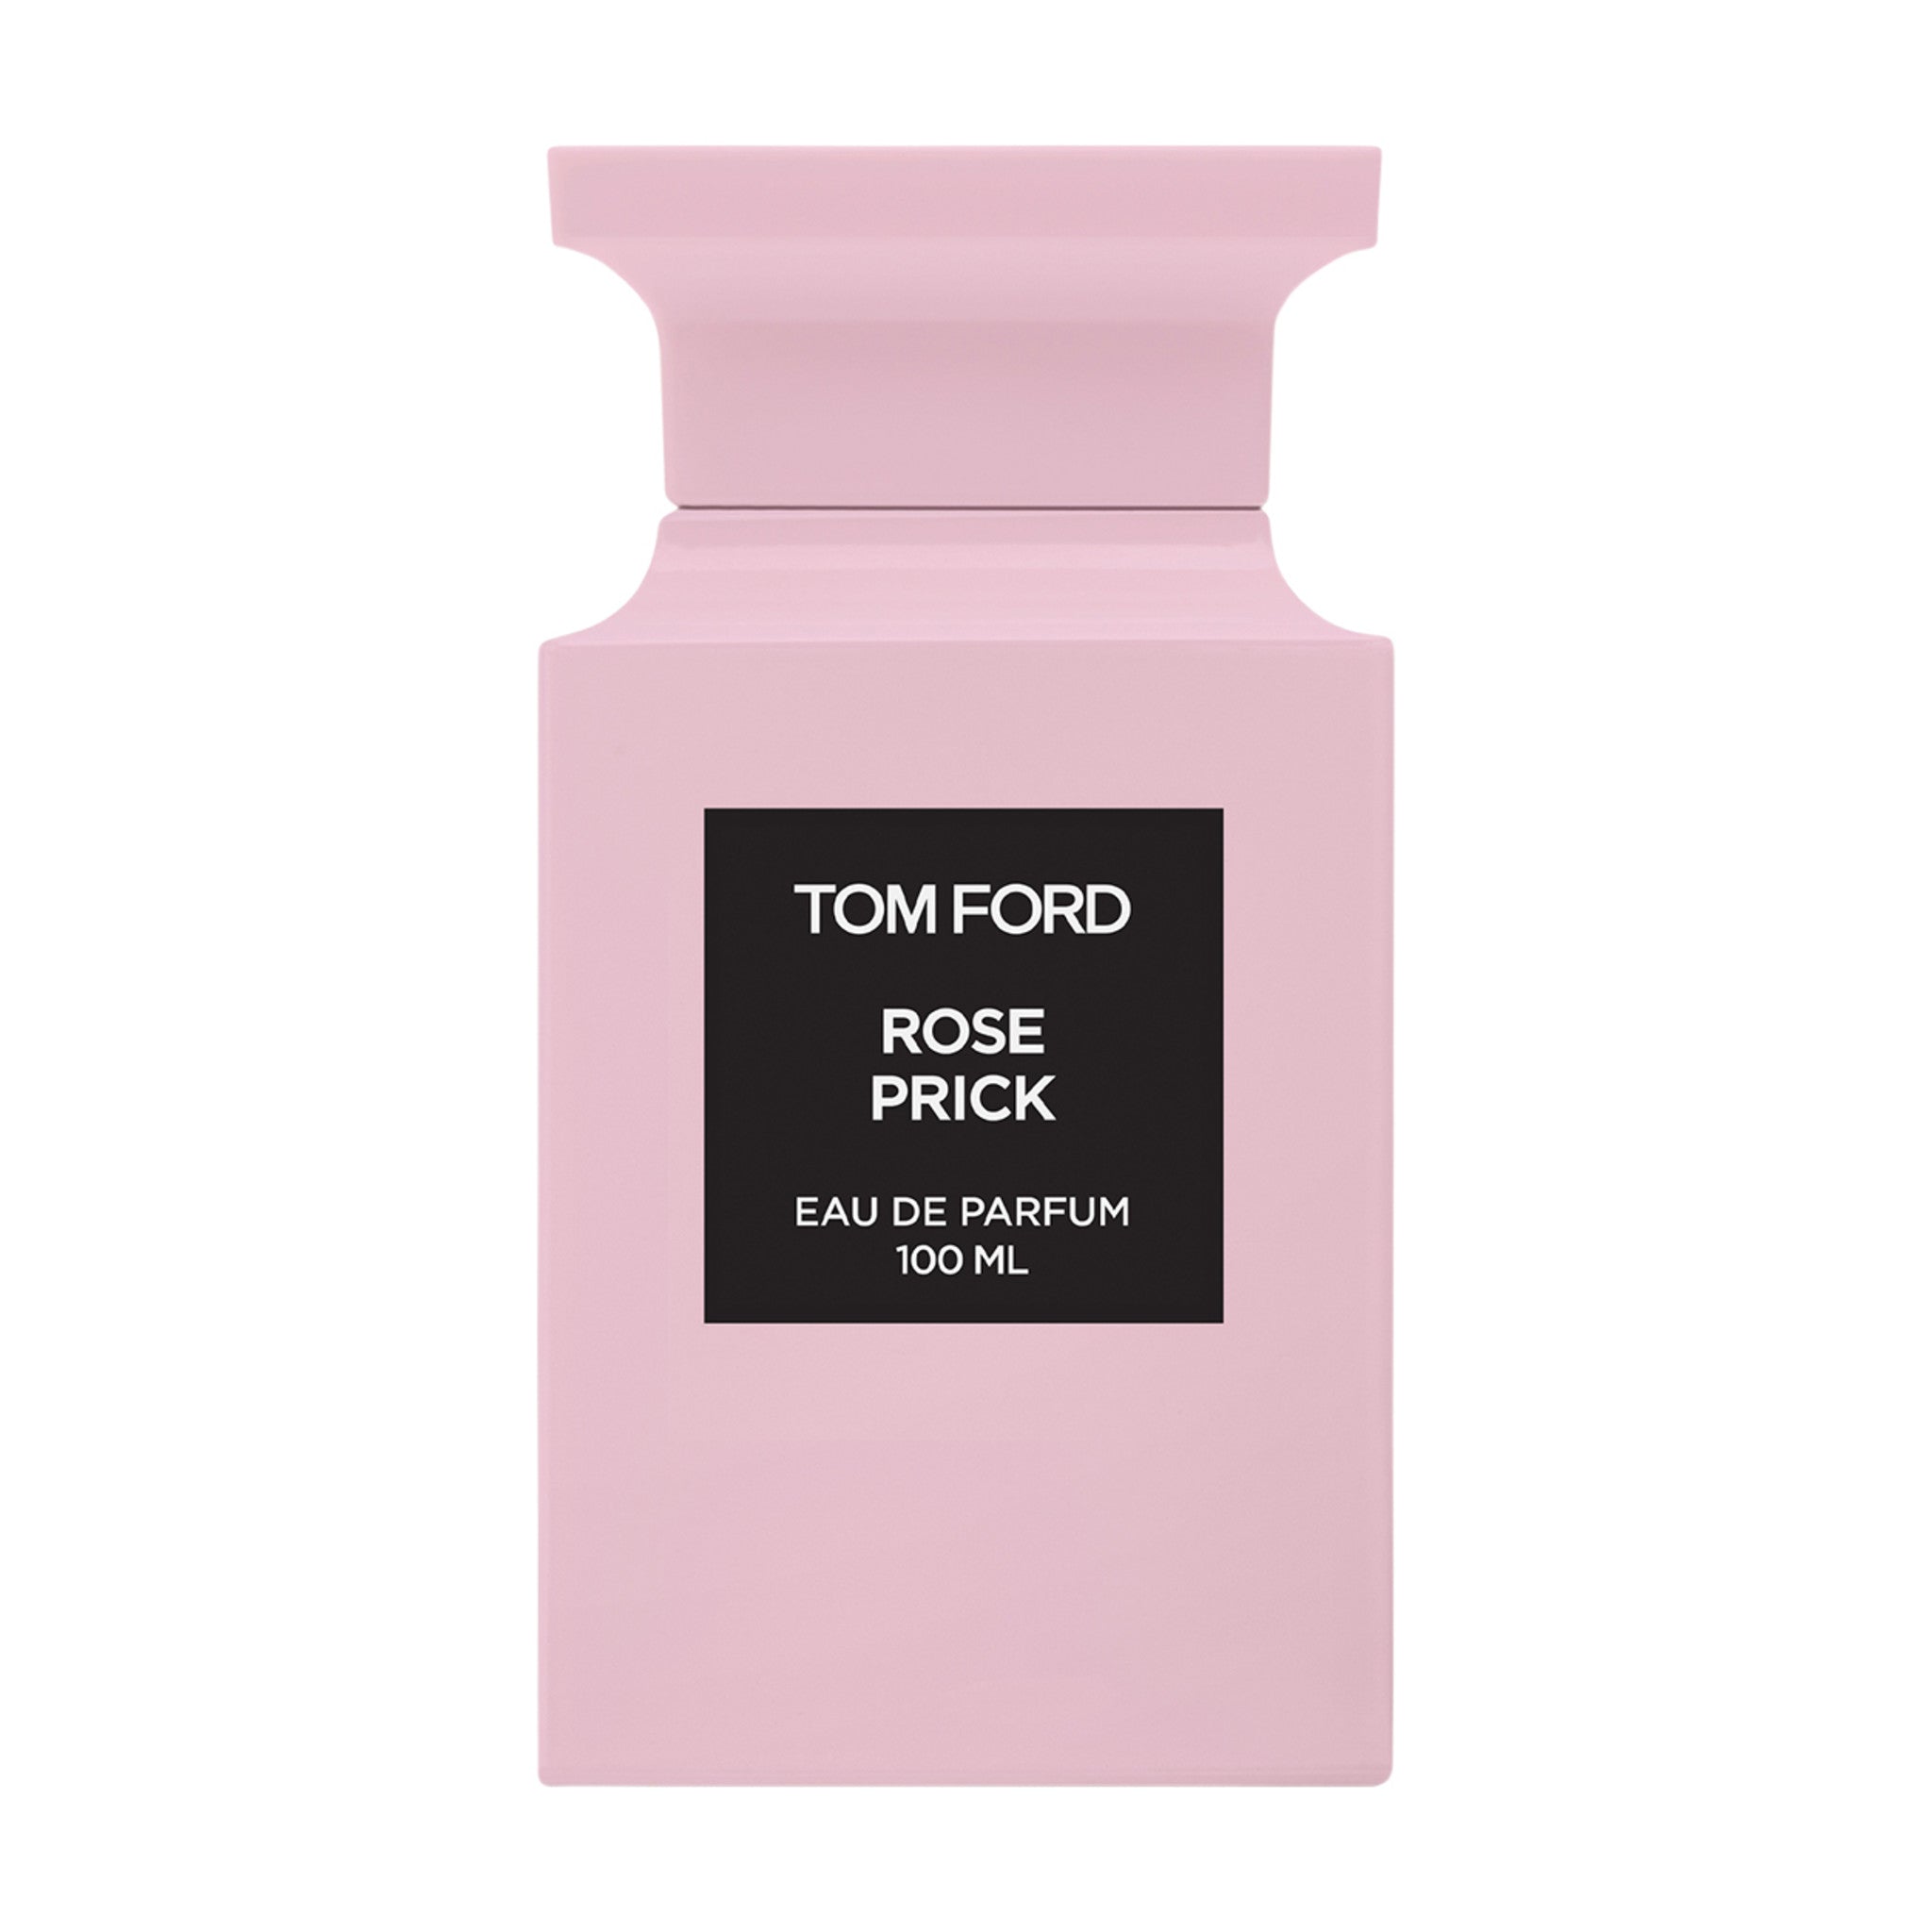 Tom Ford Rose Prick Size variant: 100 ml main image.